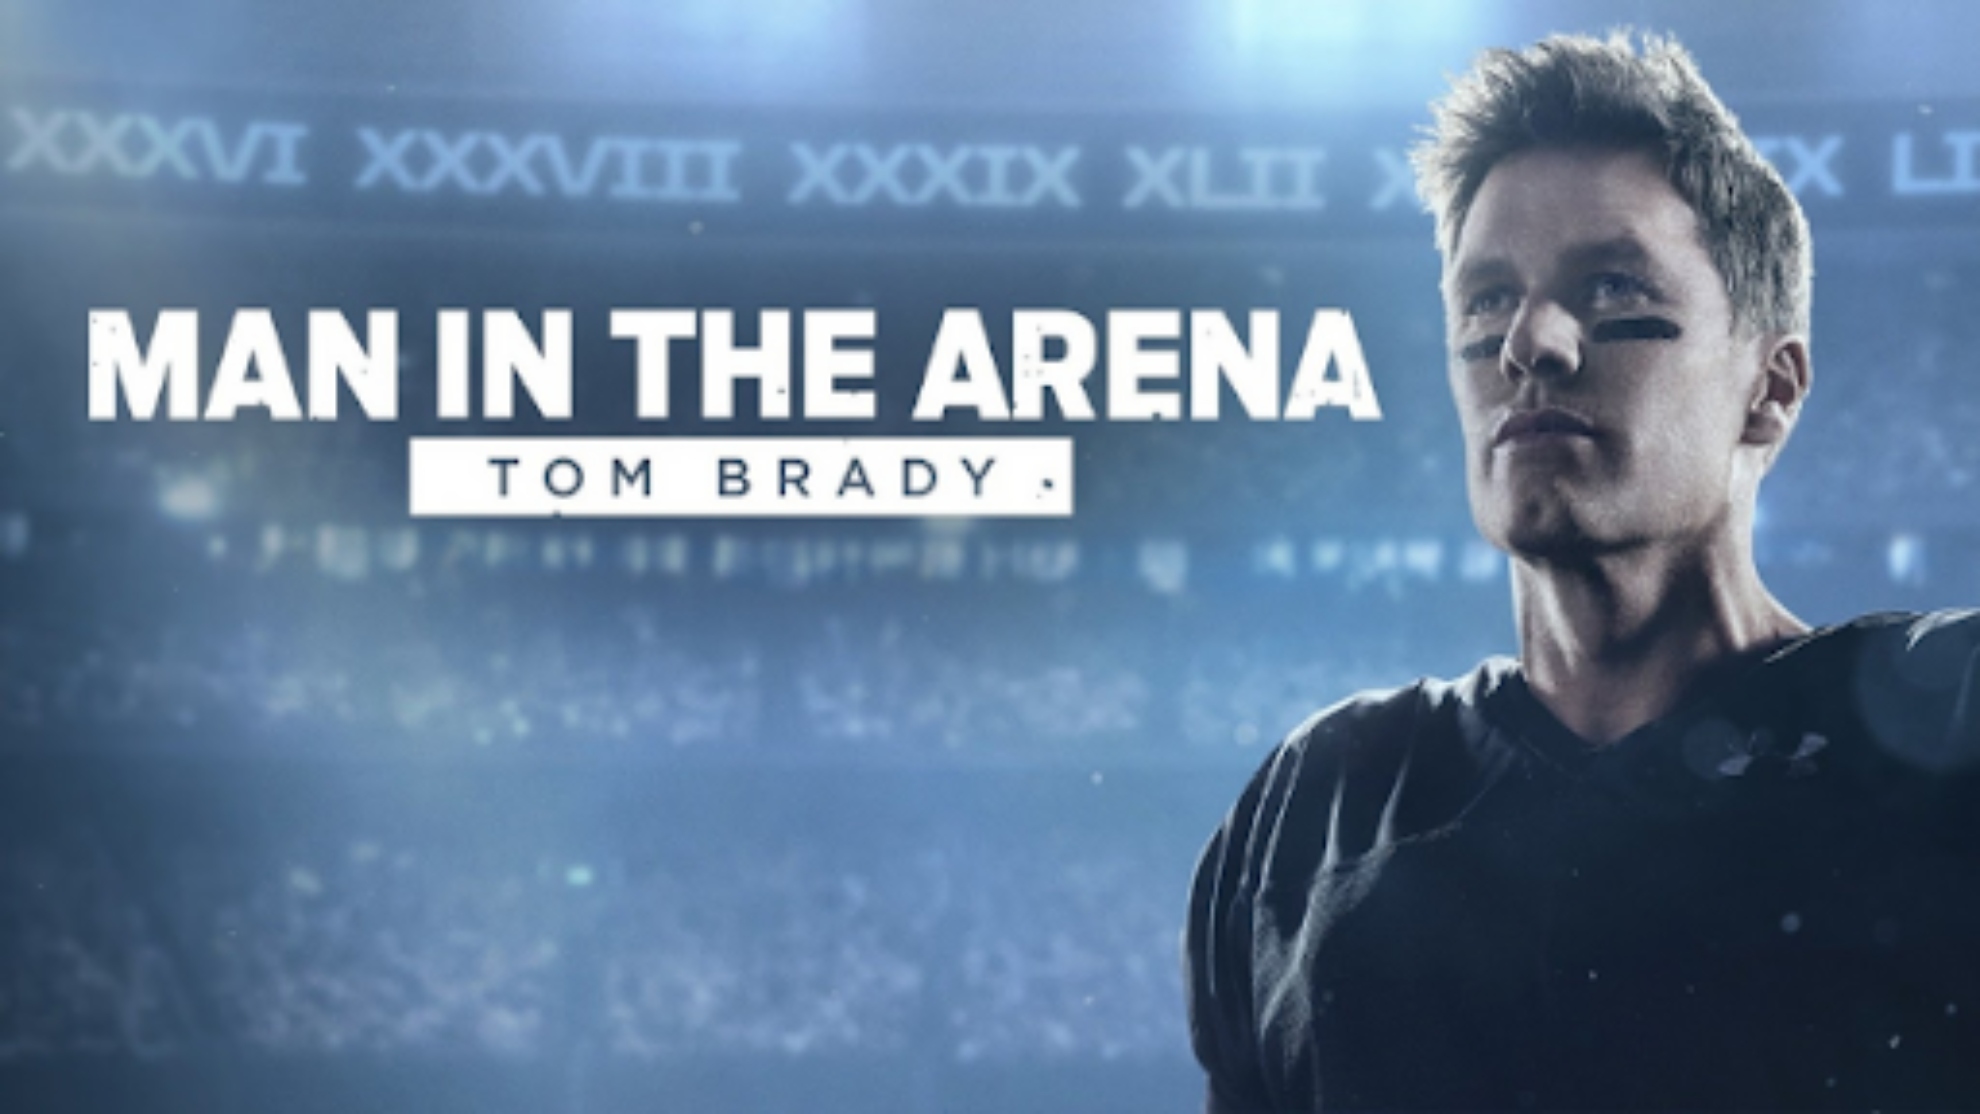 Man in the arena': Tom Brady shows career journey in documental